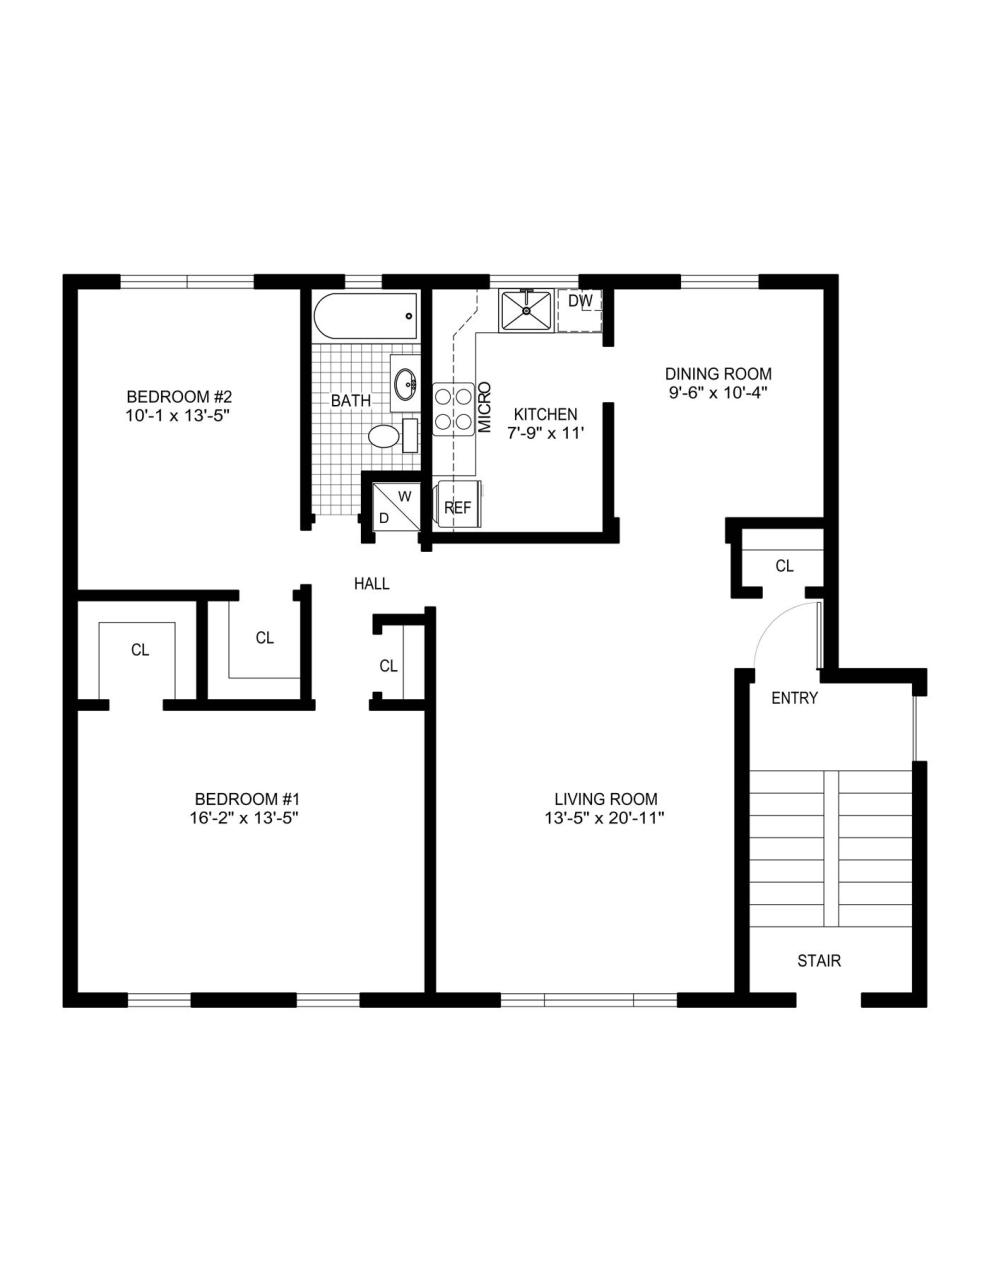 Easy Floor Plan Maker Free Draw 2d Floor Plan Online Free